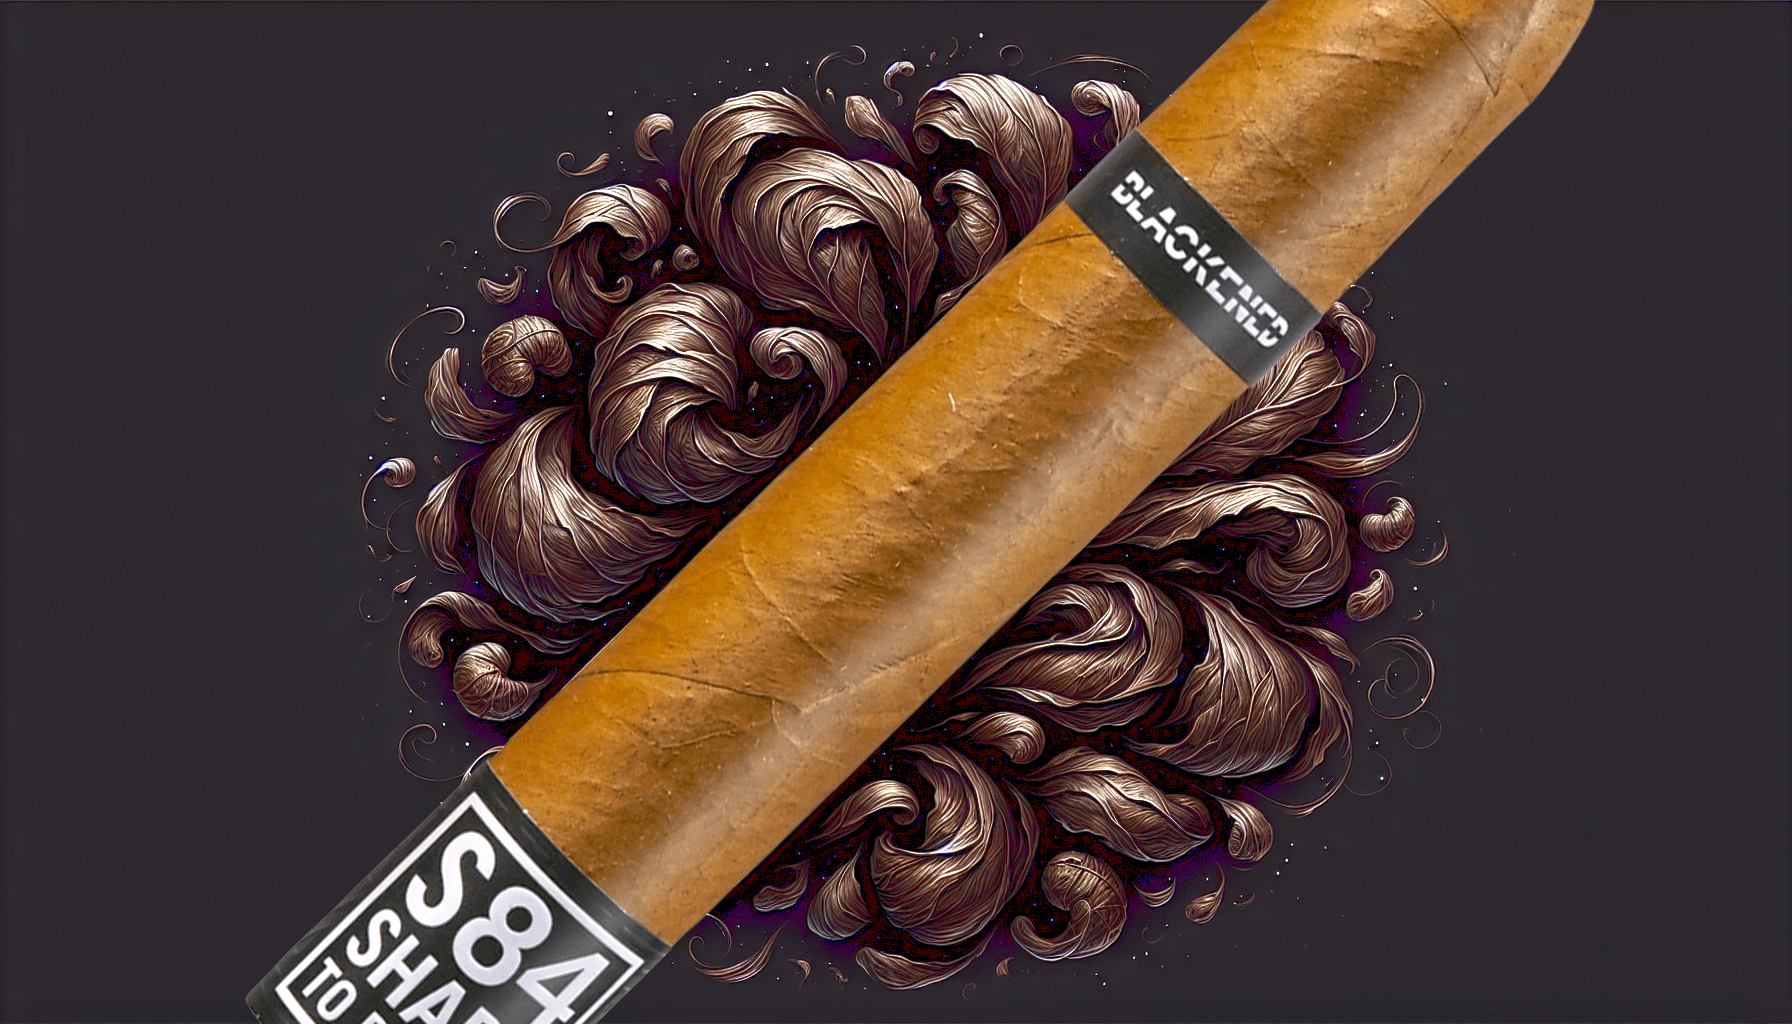 Illustration of blackened cigars